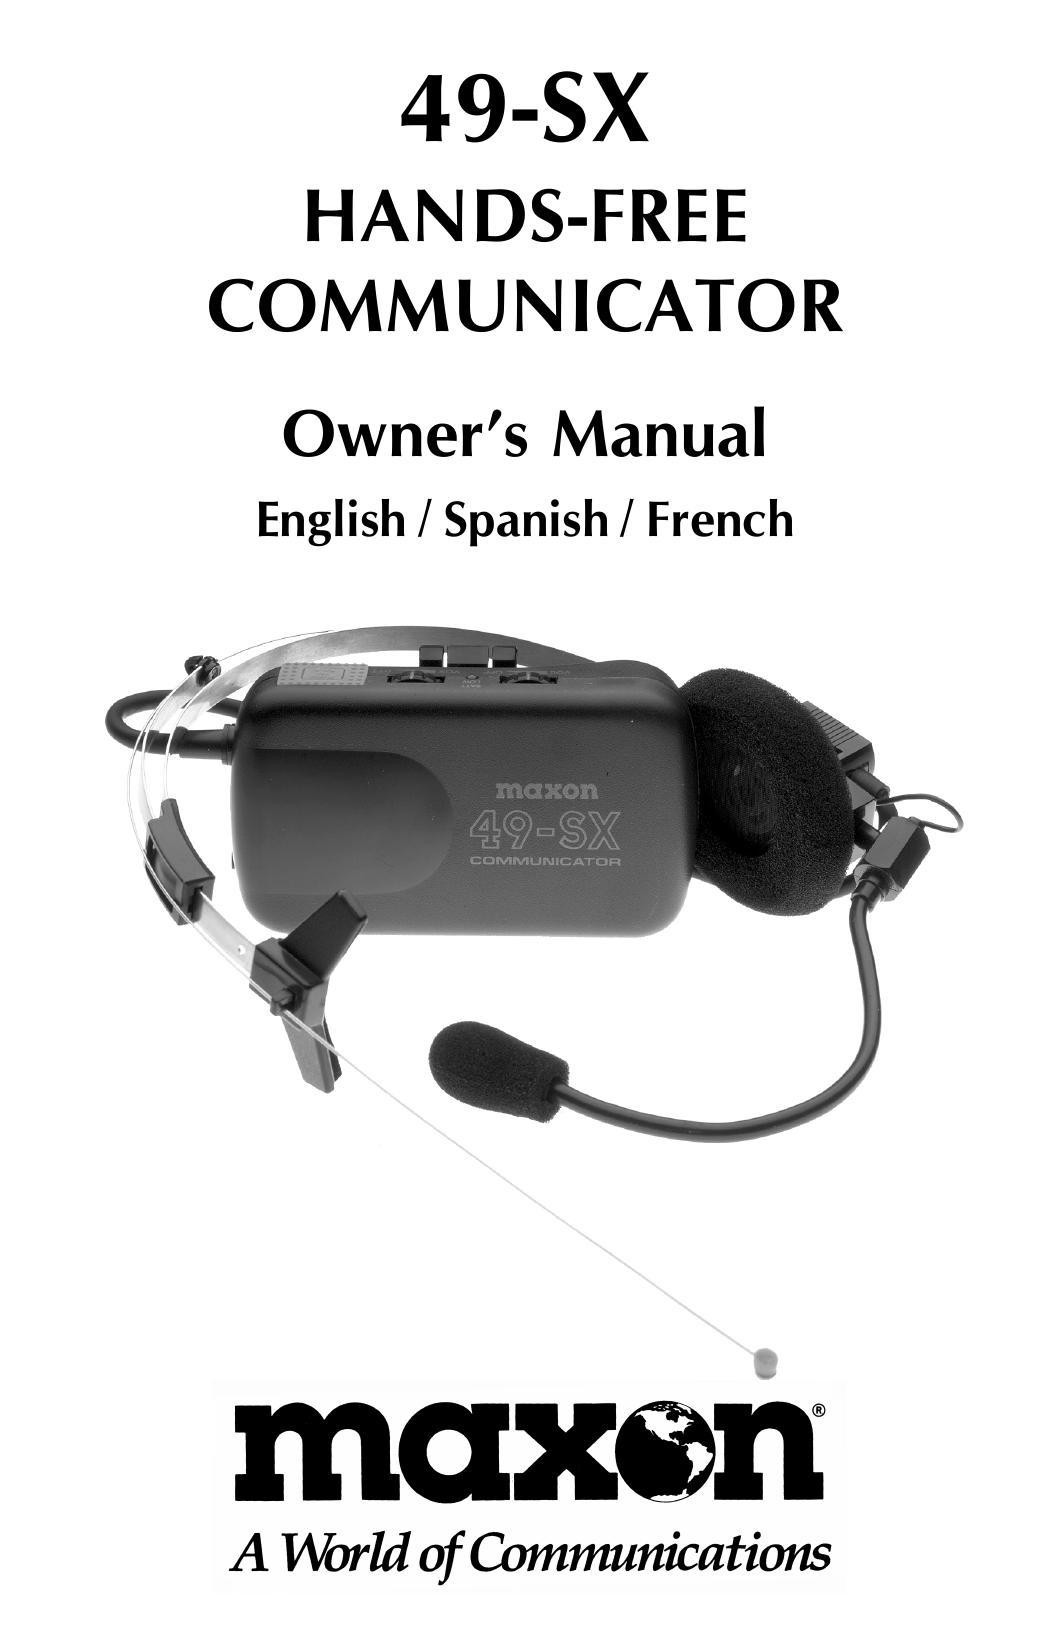 Maxon Telecom hands-free communicator Microphone User Manual